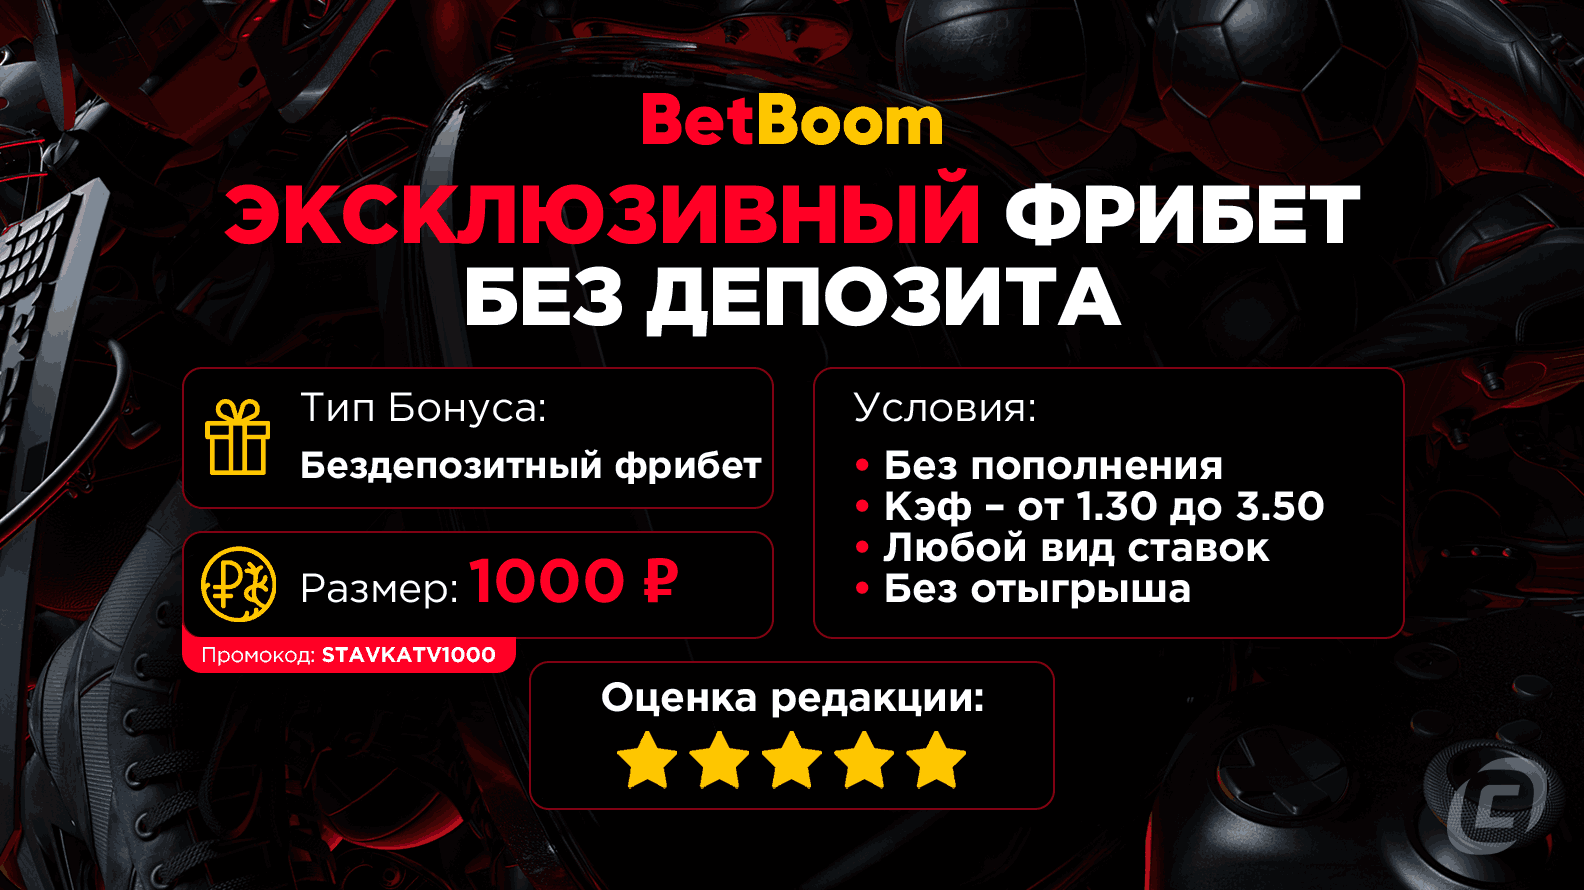 BetBoom фрибет 1000 рублей